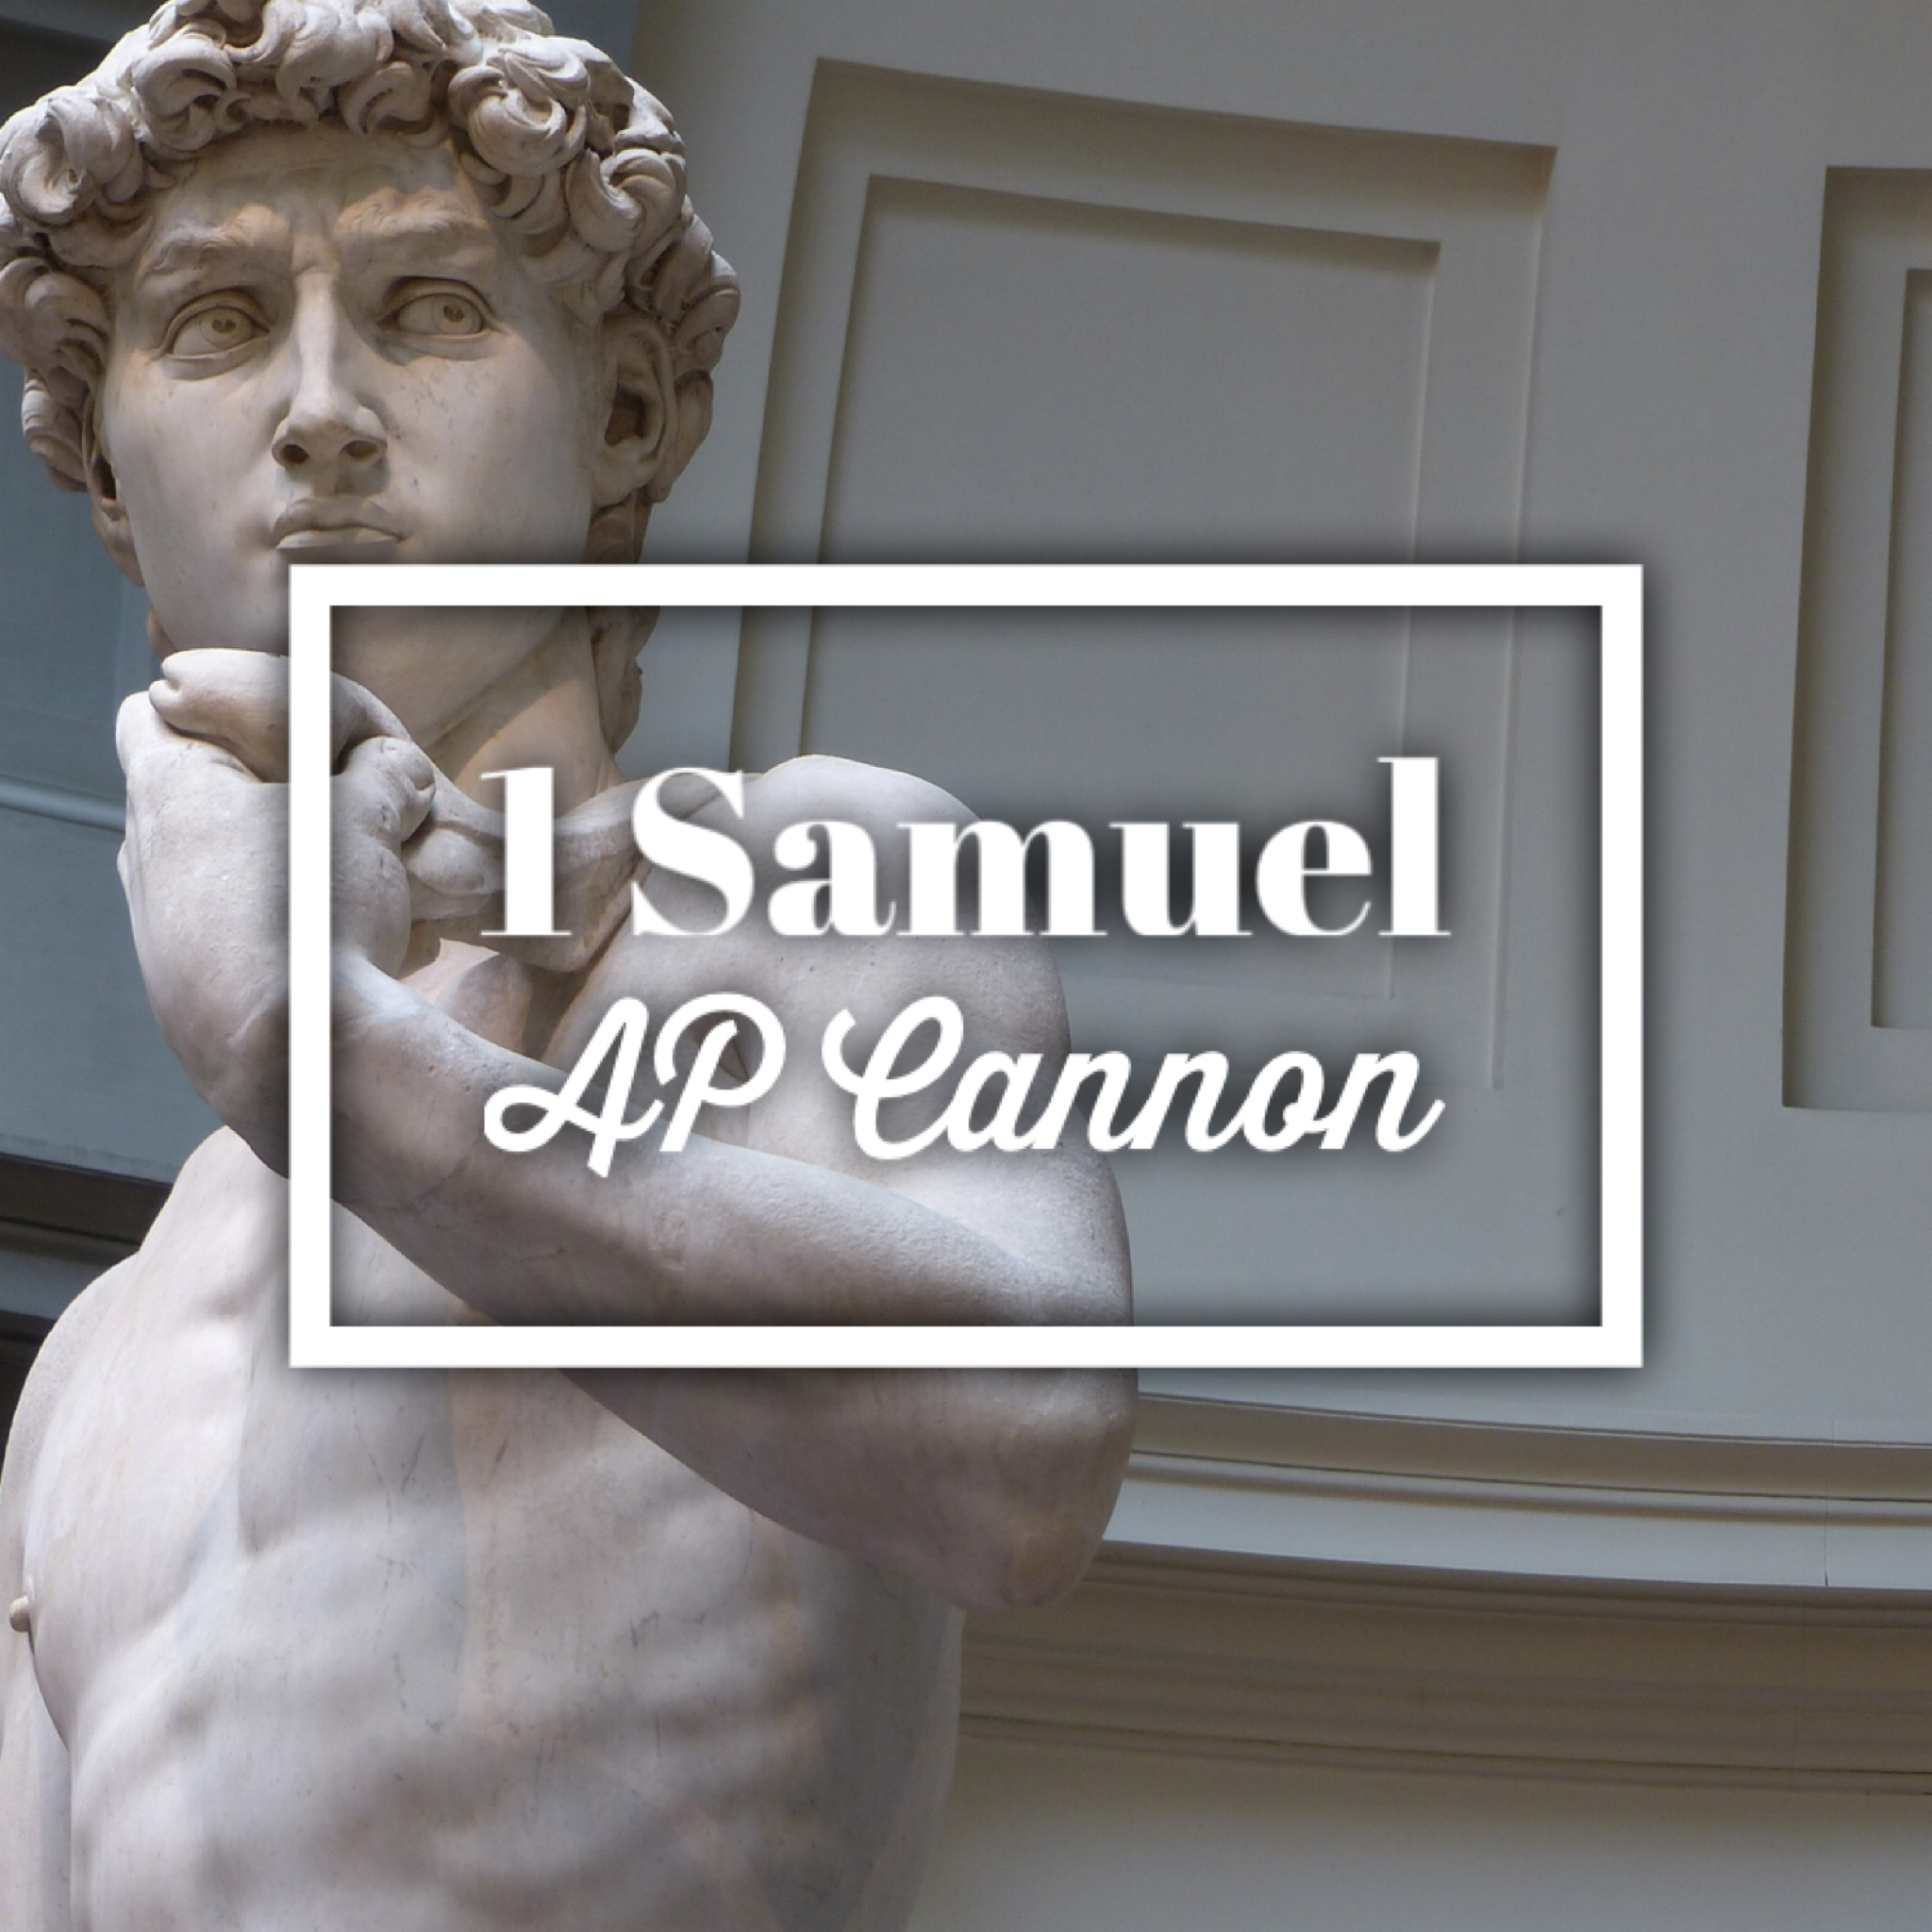 1 Samuel: Andrew Paul Cannon Sermons